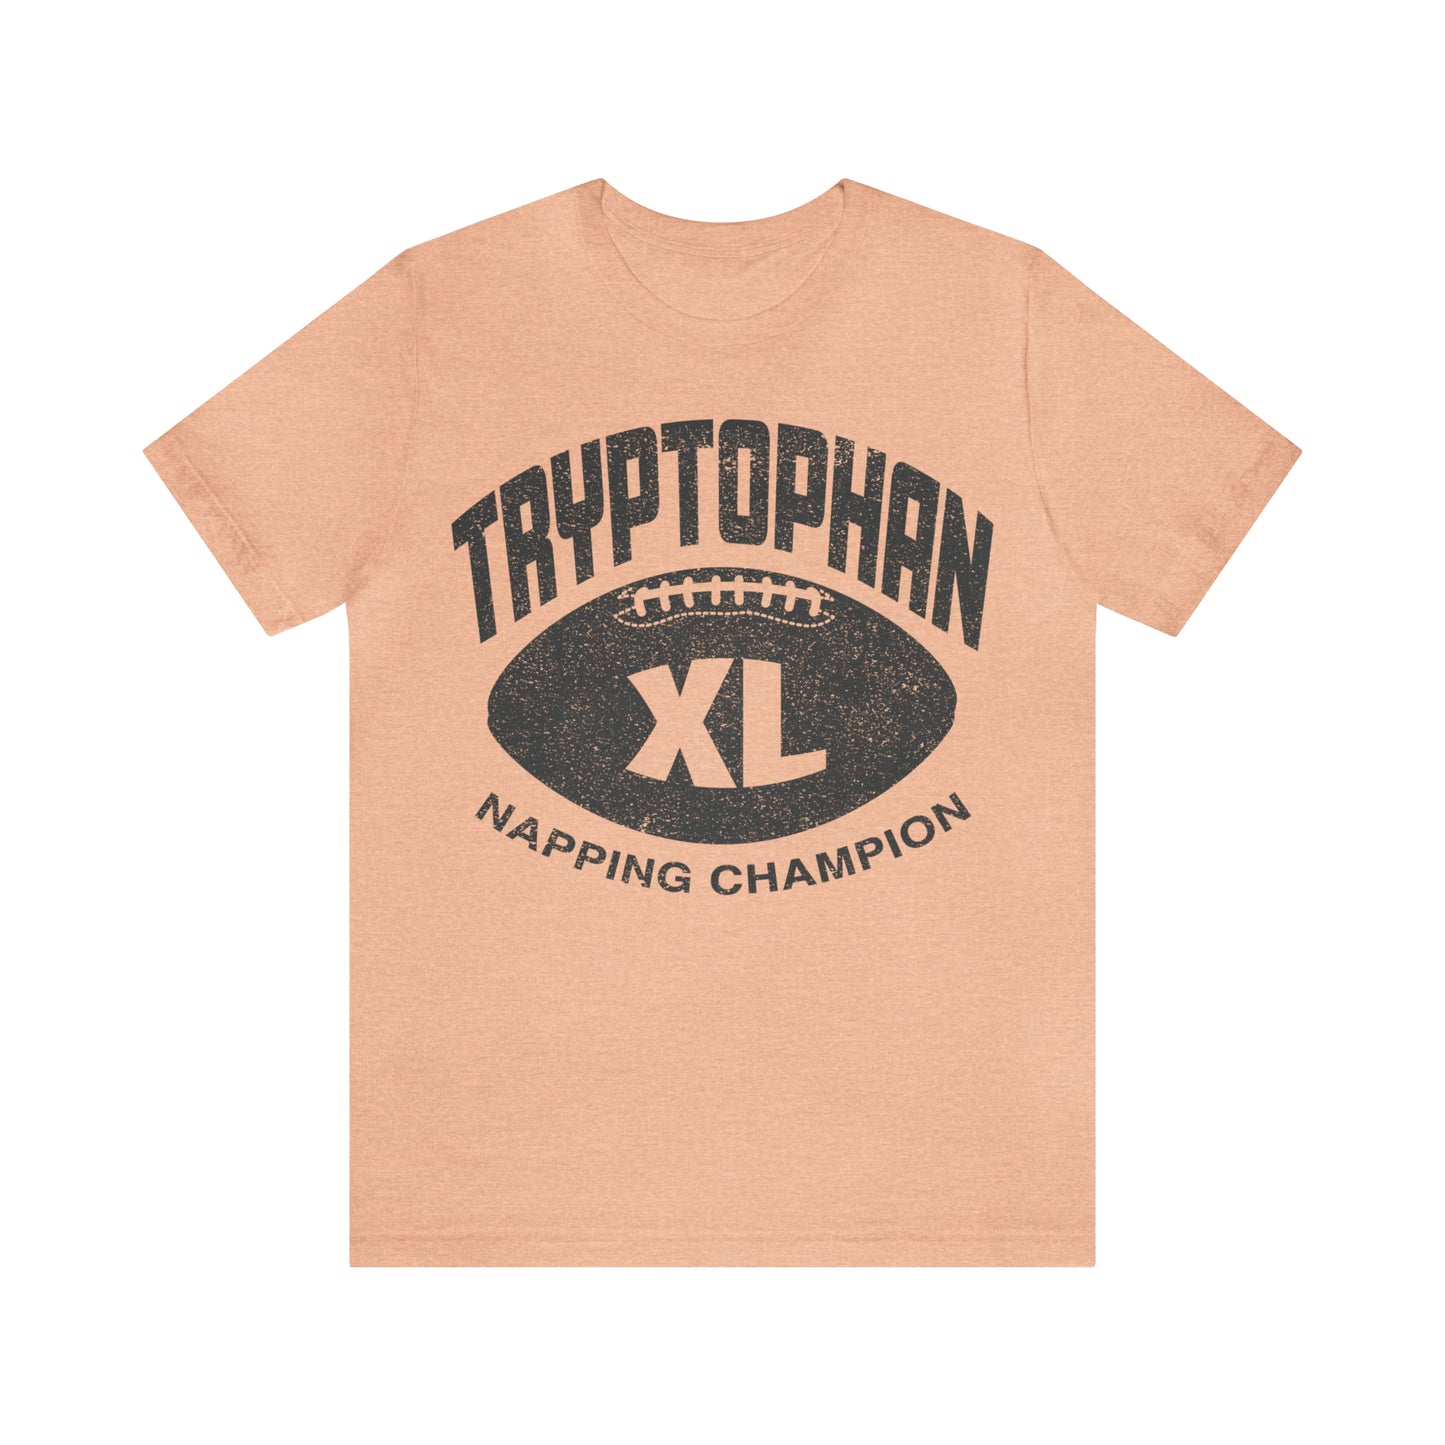 Thanksgiving Funny Premium T-Shirt, Football, Turkey, Tryptophan, Napping